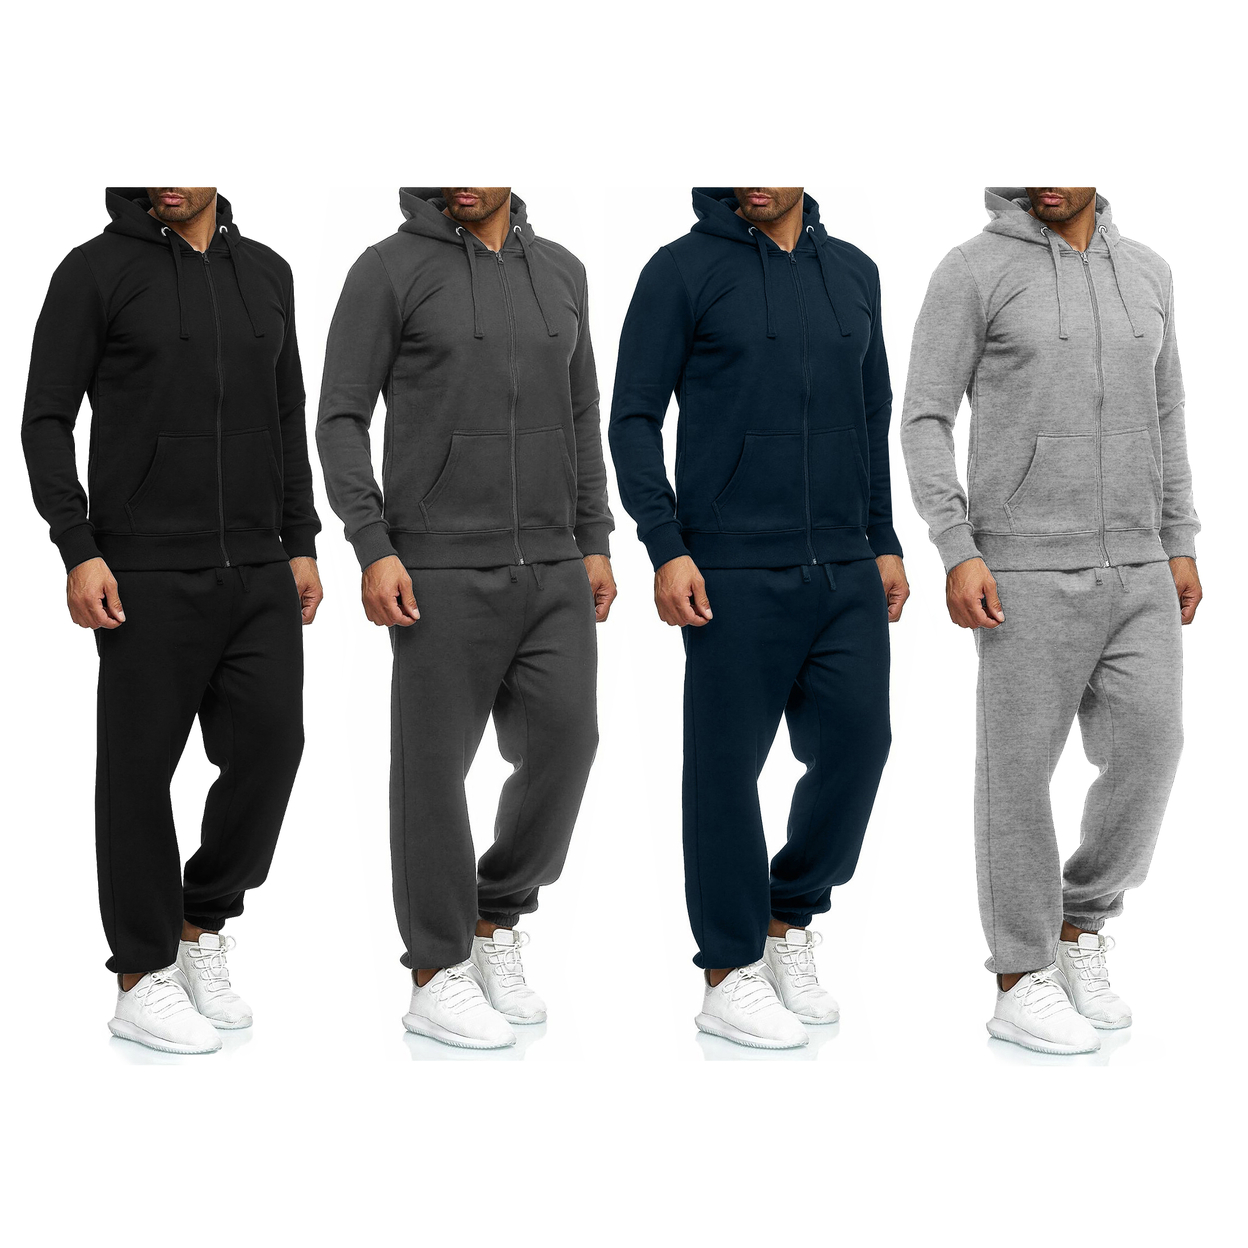 2/4-Piece: Men's Winter Warm Cozy Athletic Multi-Pockets BIG & TALL Sweatsuit Set - Navy, 2, Small